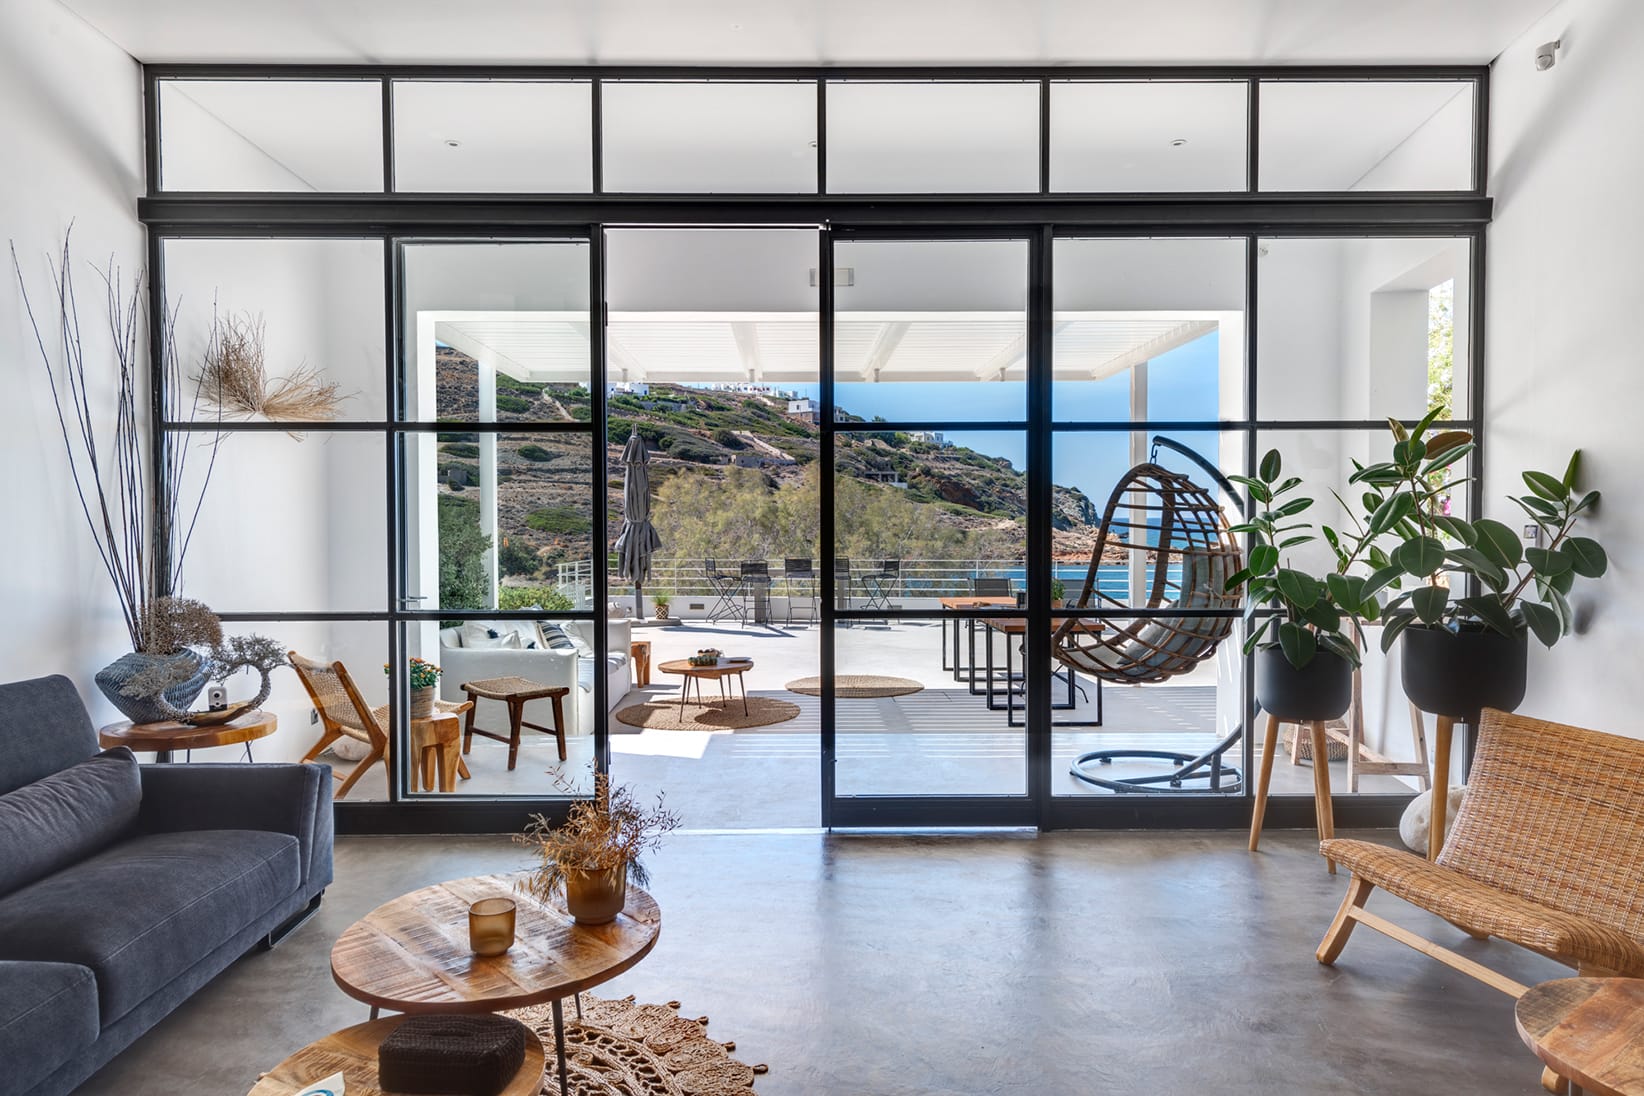 Evripiotis Architects--Lottos House, Syros Island